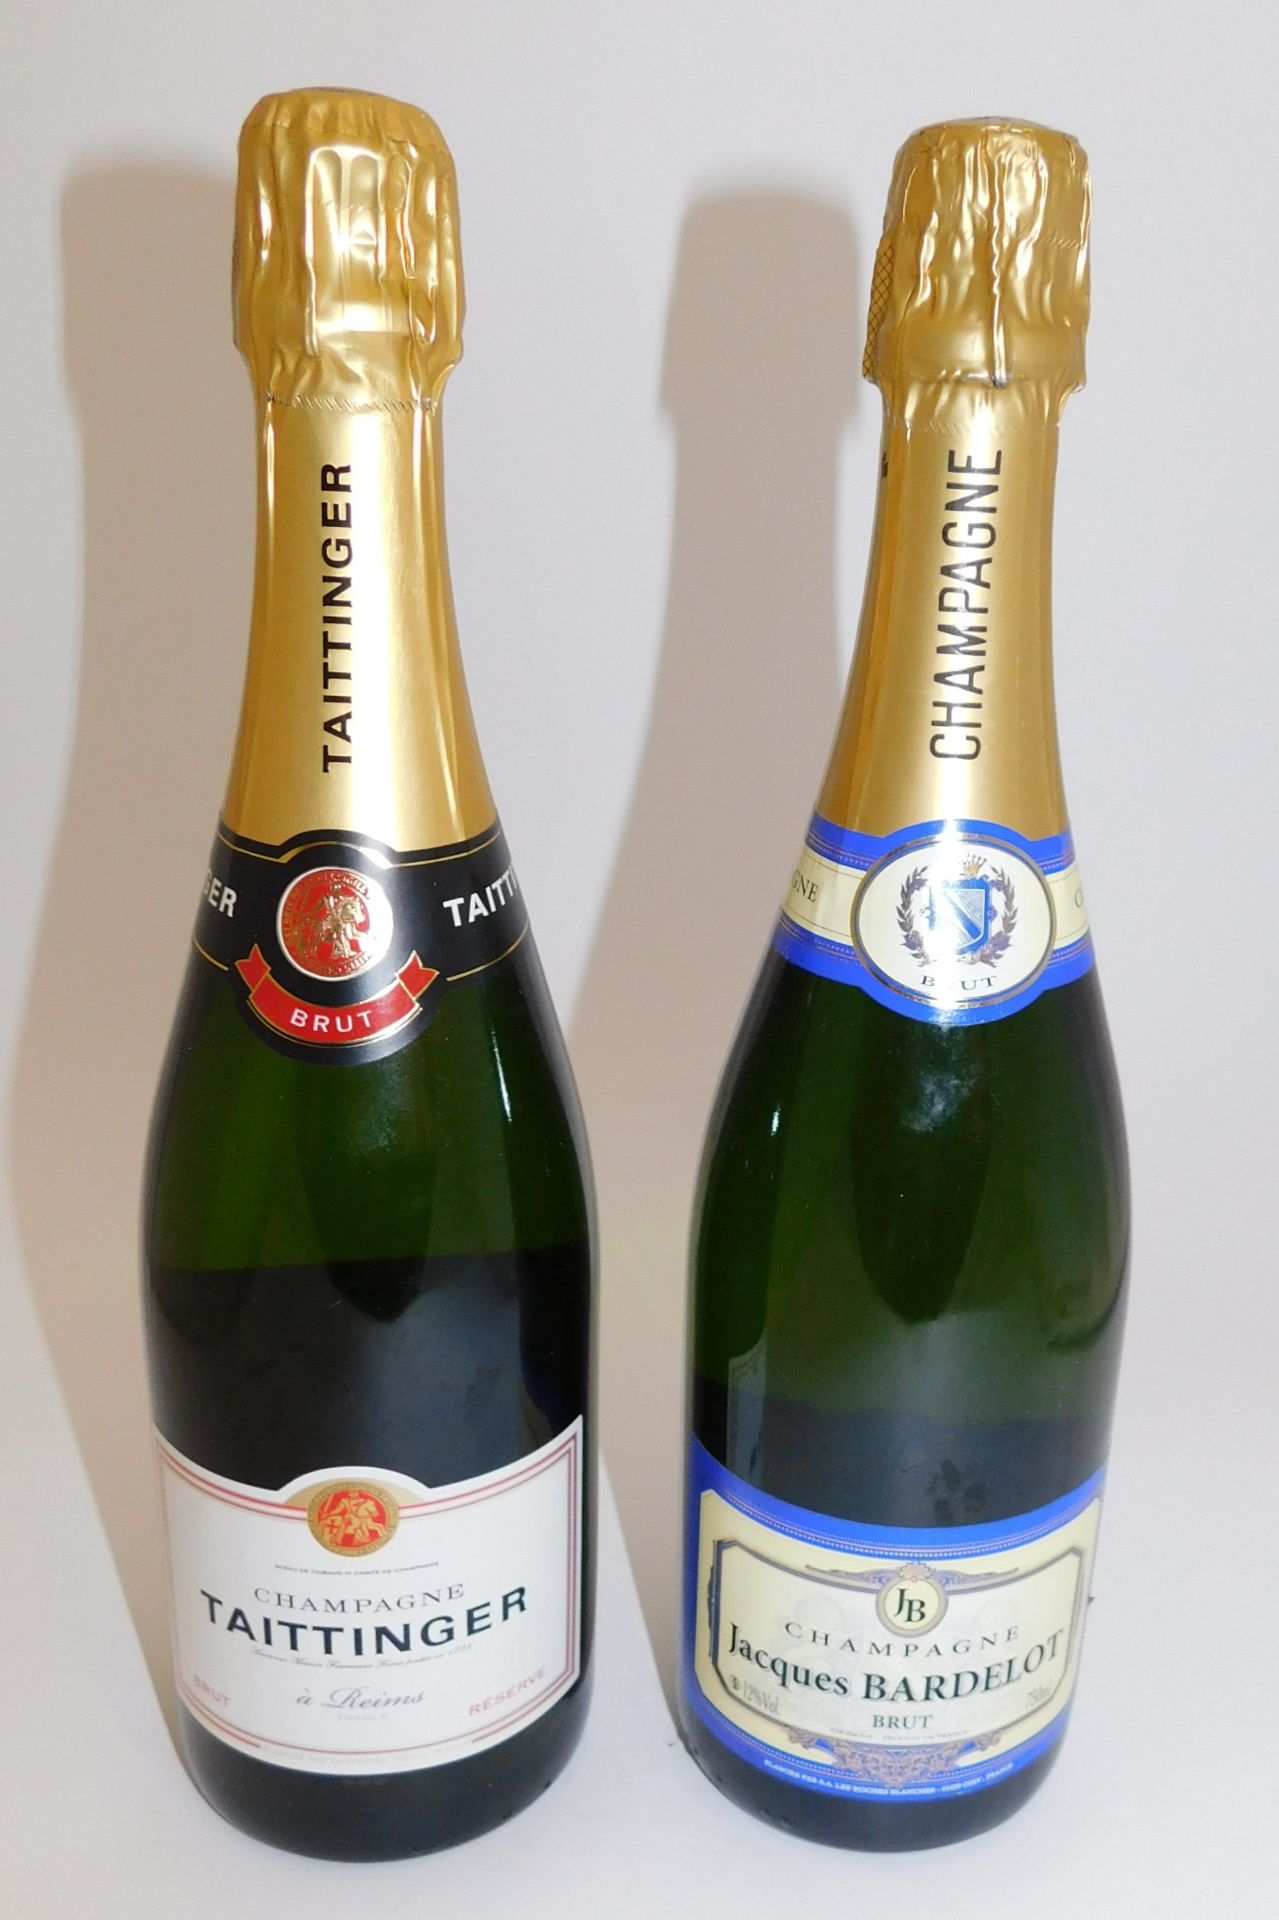 14 Bottles of Champagne to Include; 11 Tattinger Brut Reserve, 750ml & 3 Jacques Bardelot Brut,